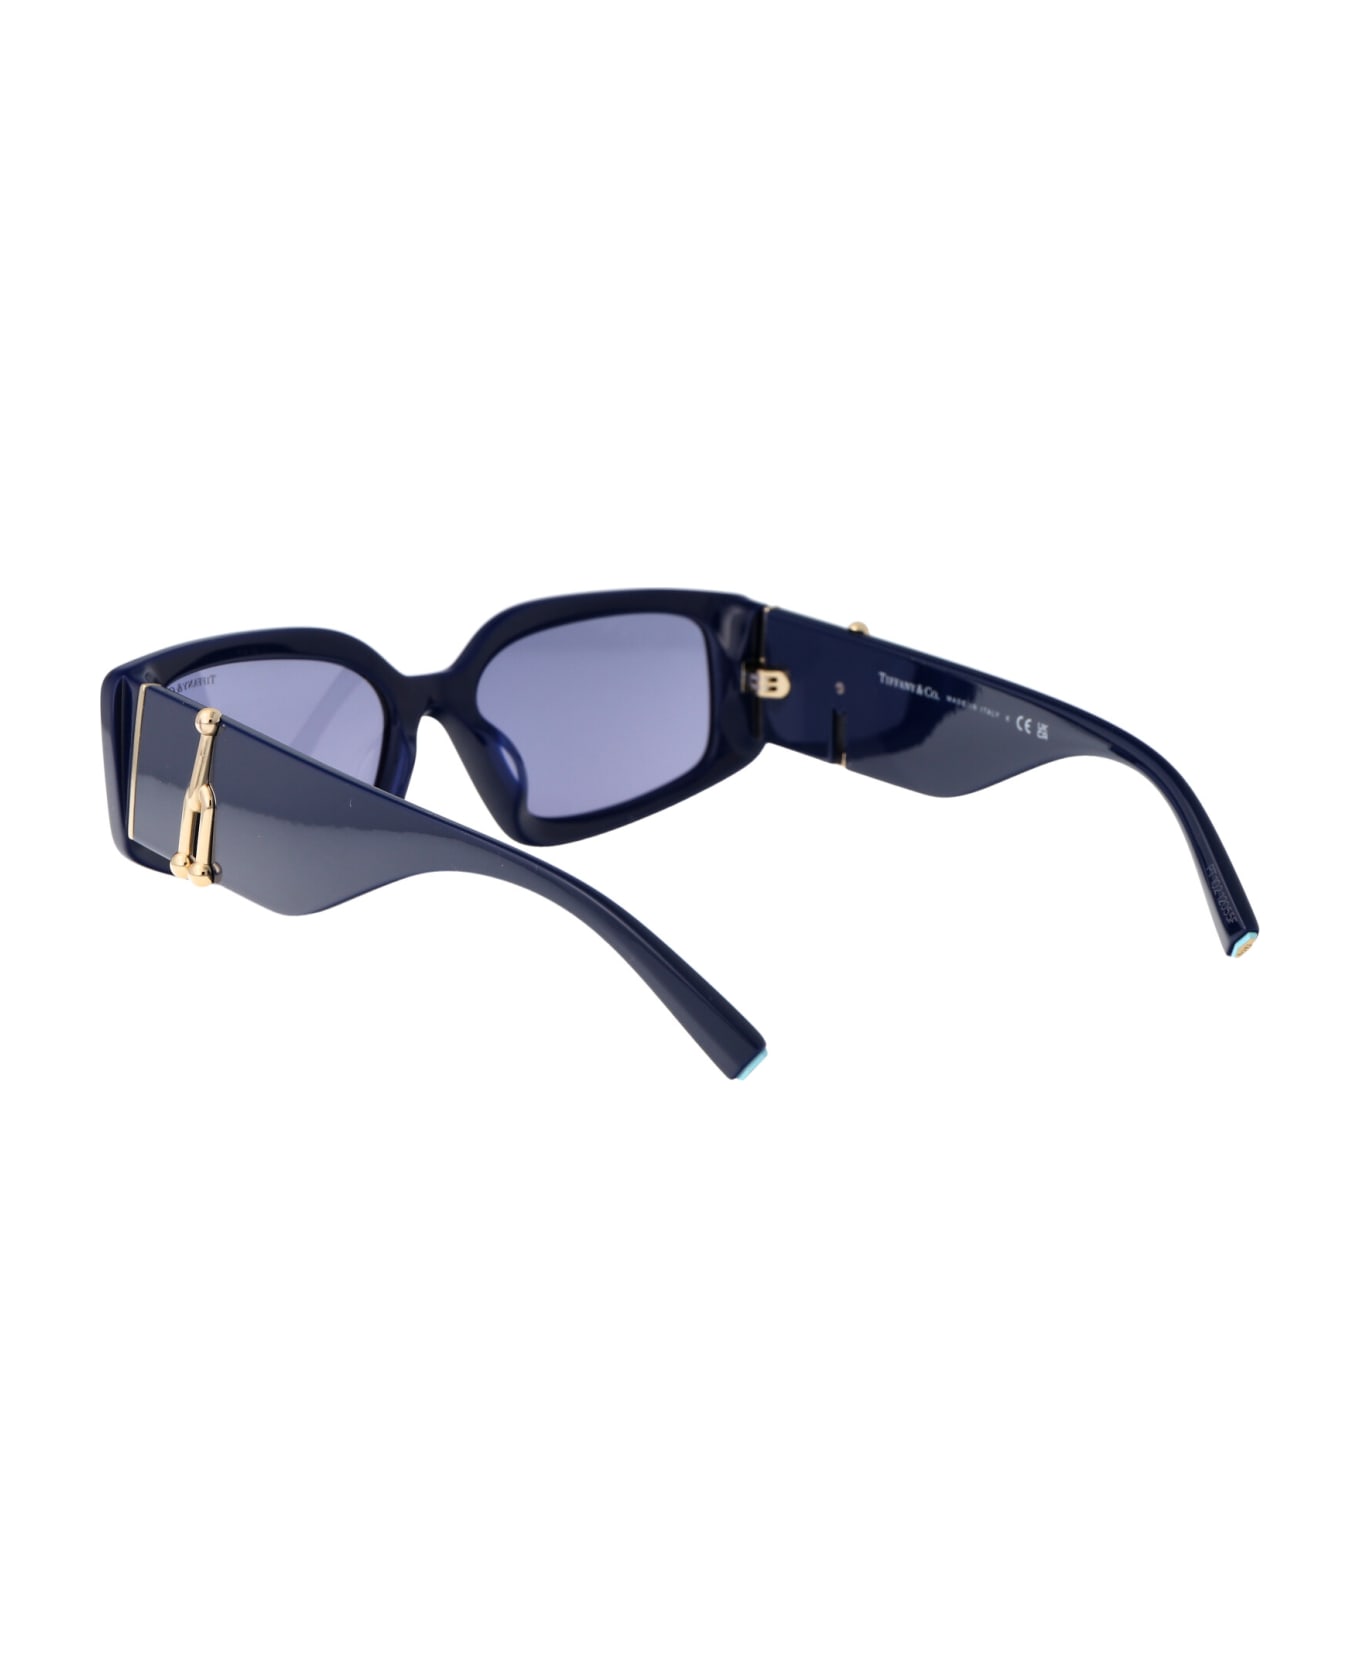 Tiffany & Co. 0tf4208u Sunglasses - 83852S Spectrum Blue サングラス